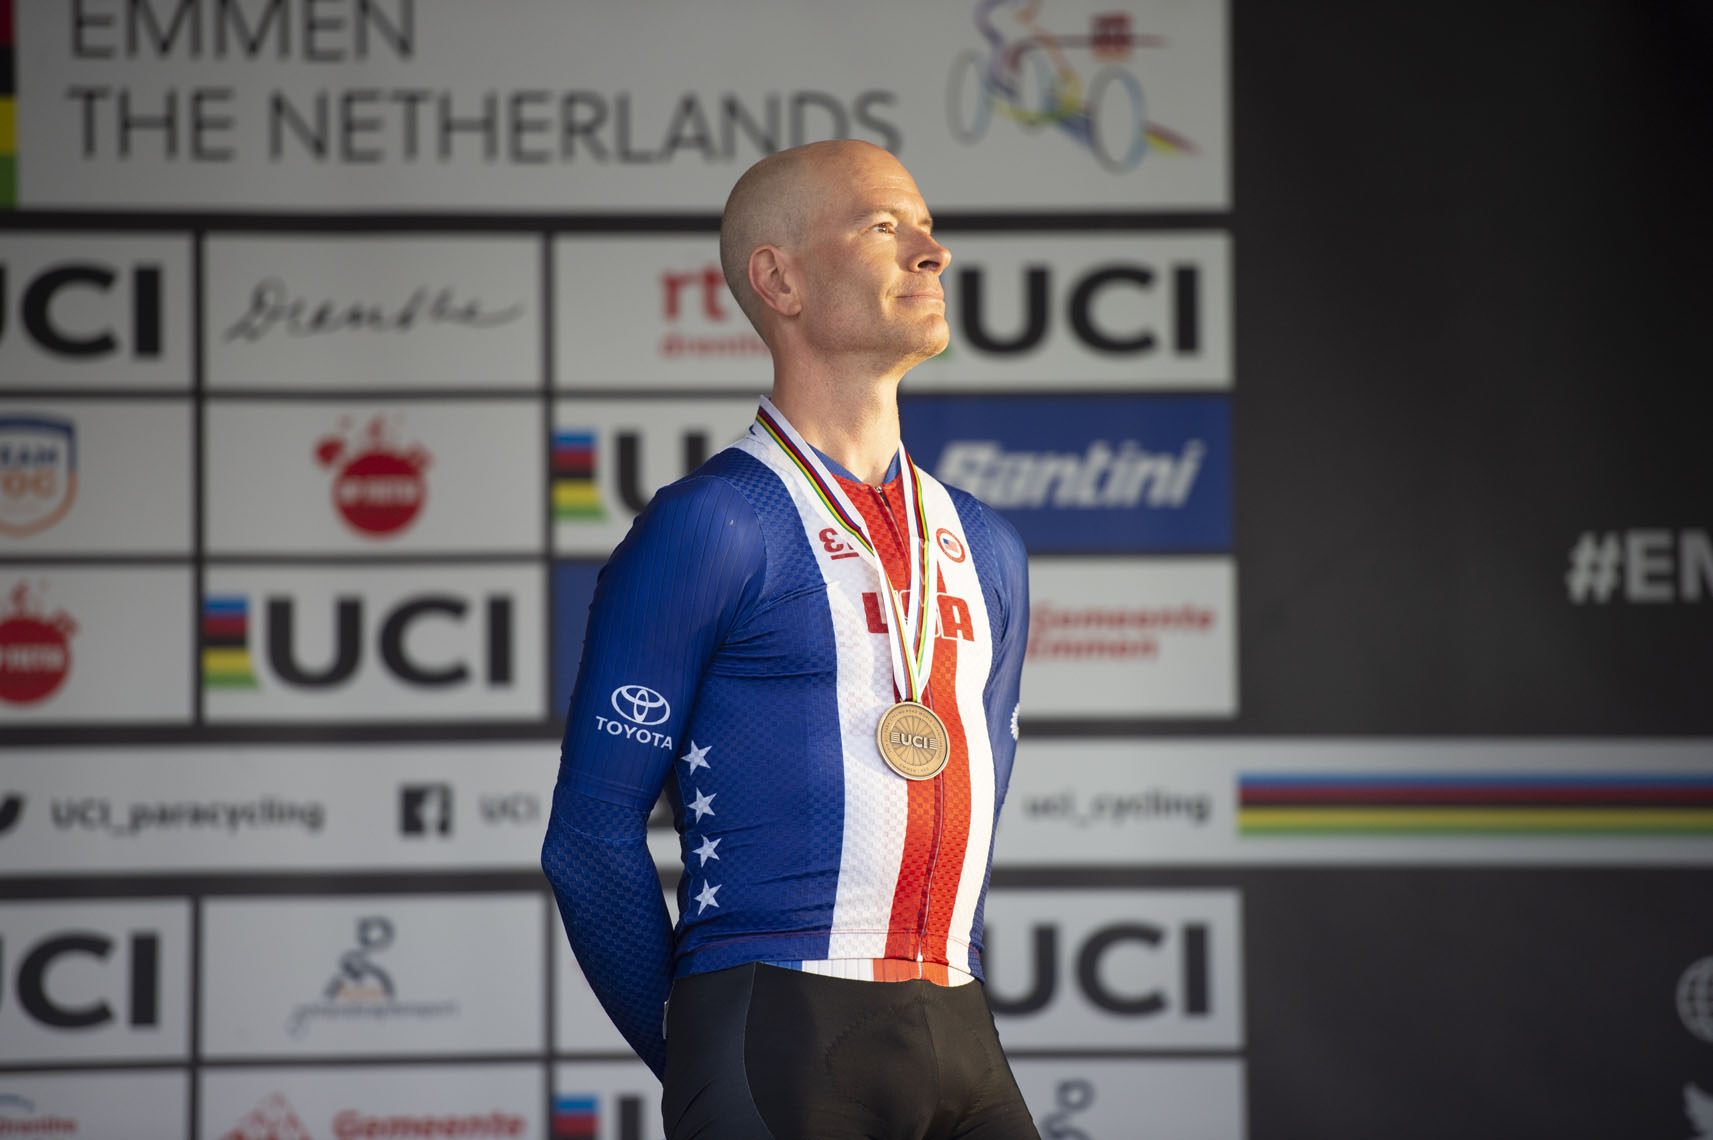 Aaron Keith, 2019 Paracycling Road World Championships